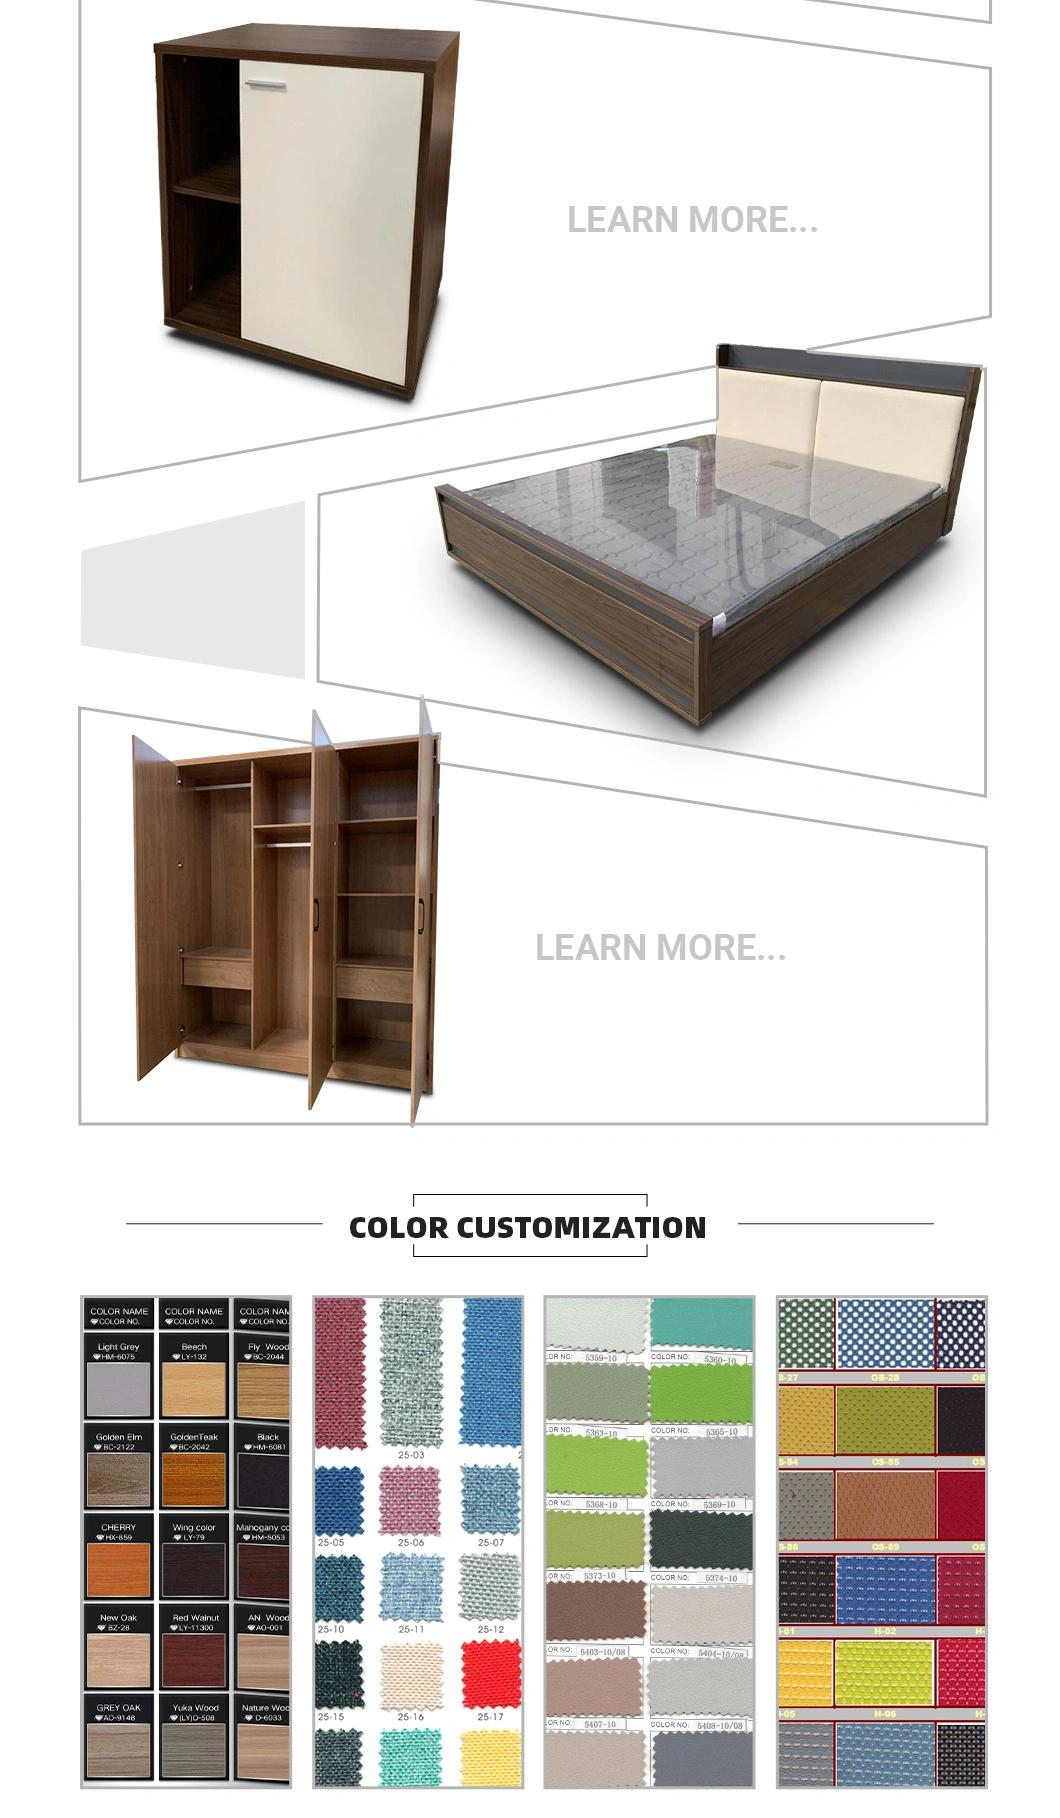 Modern Wooden Style Certified Hot Sale Bedroom Furniture Bedroom Bed